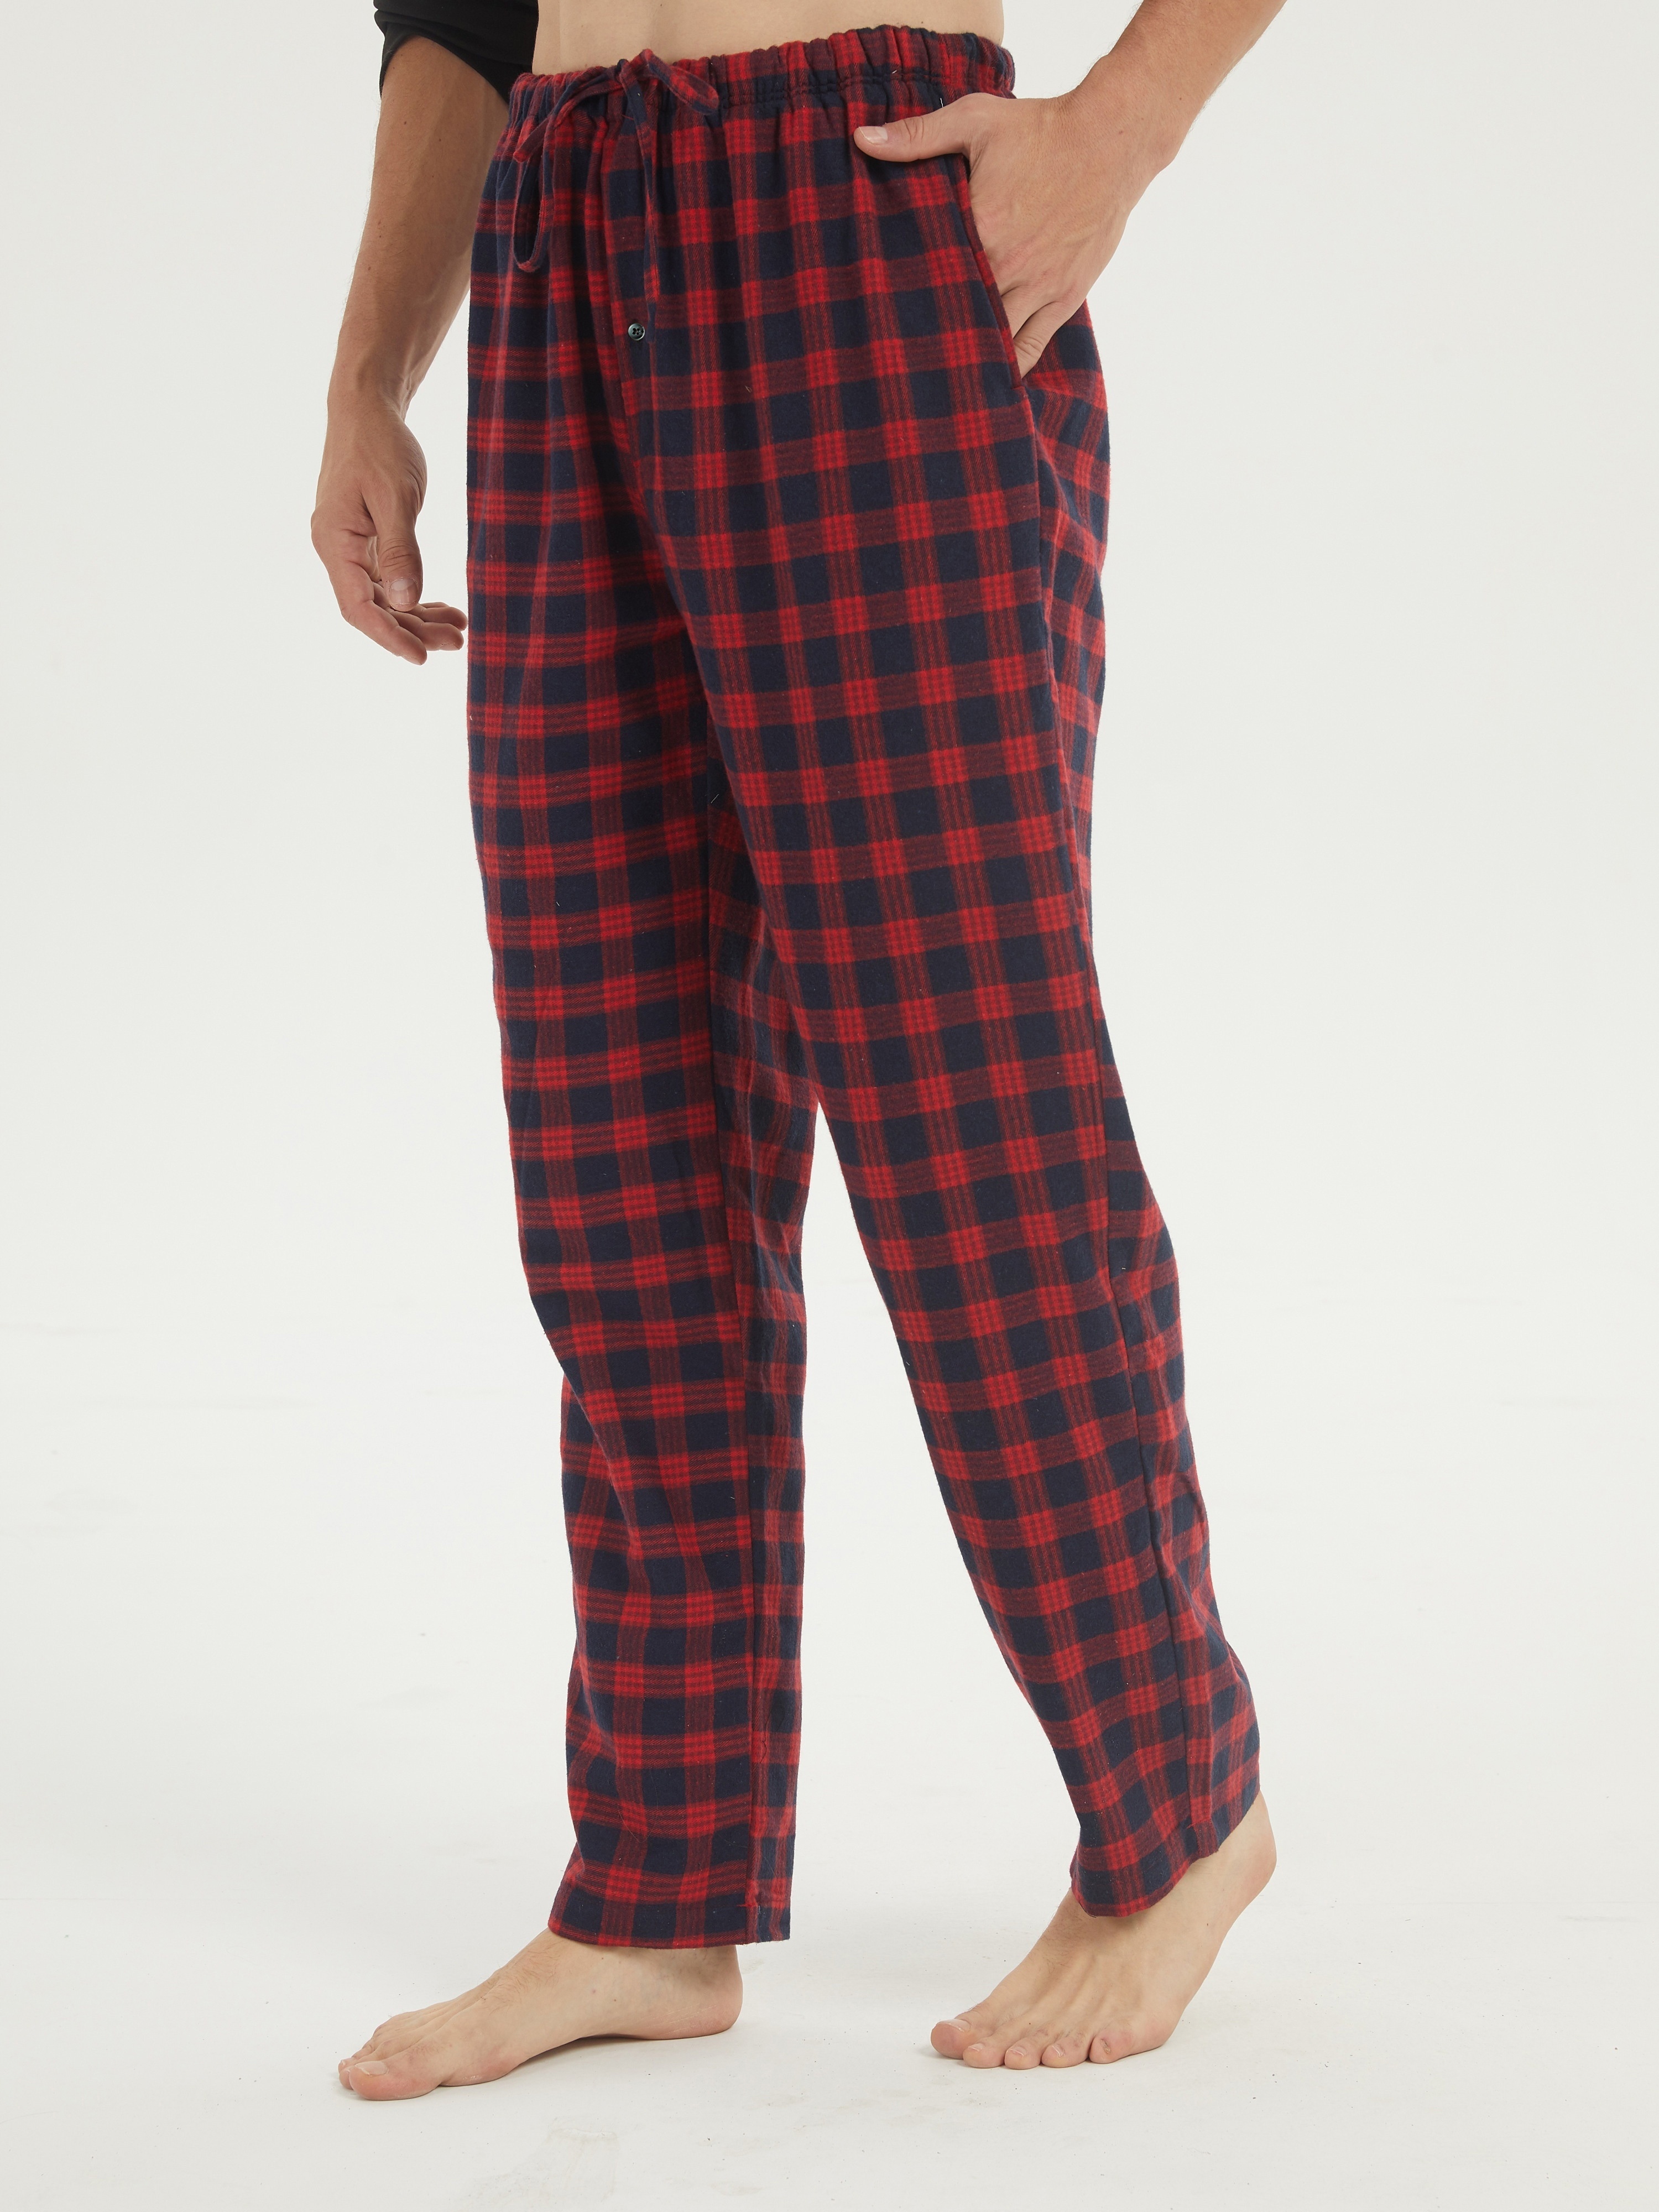 Prince of Sleep Boys' Plush Fleece Pajama Pants - Warm and Cozy Sleepwear ( Red - Buffalo Plaid, 5-6 Years) 